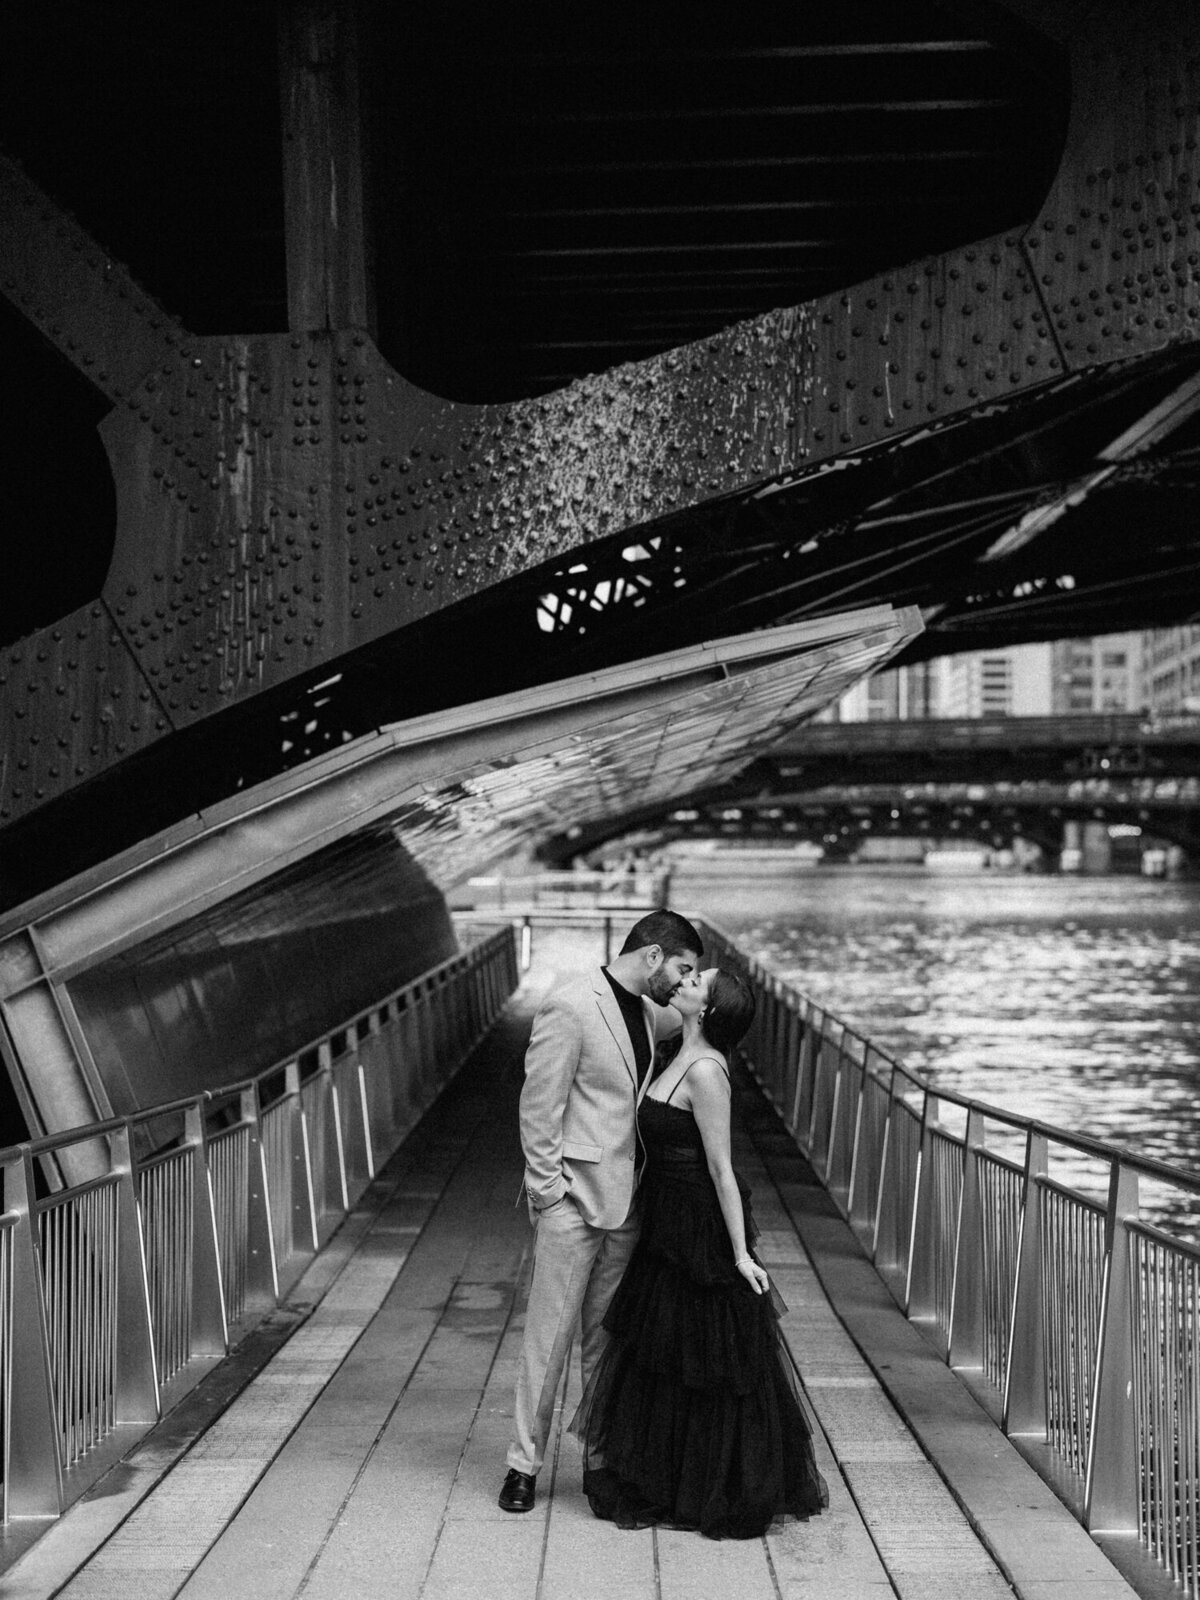 A beautiful engagement photo taken along the Chicago Riverwalk